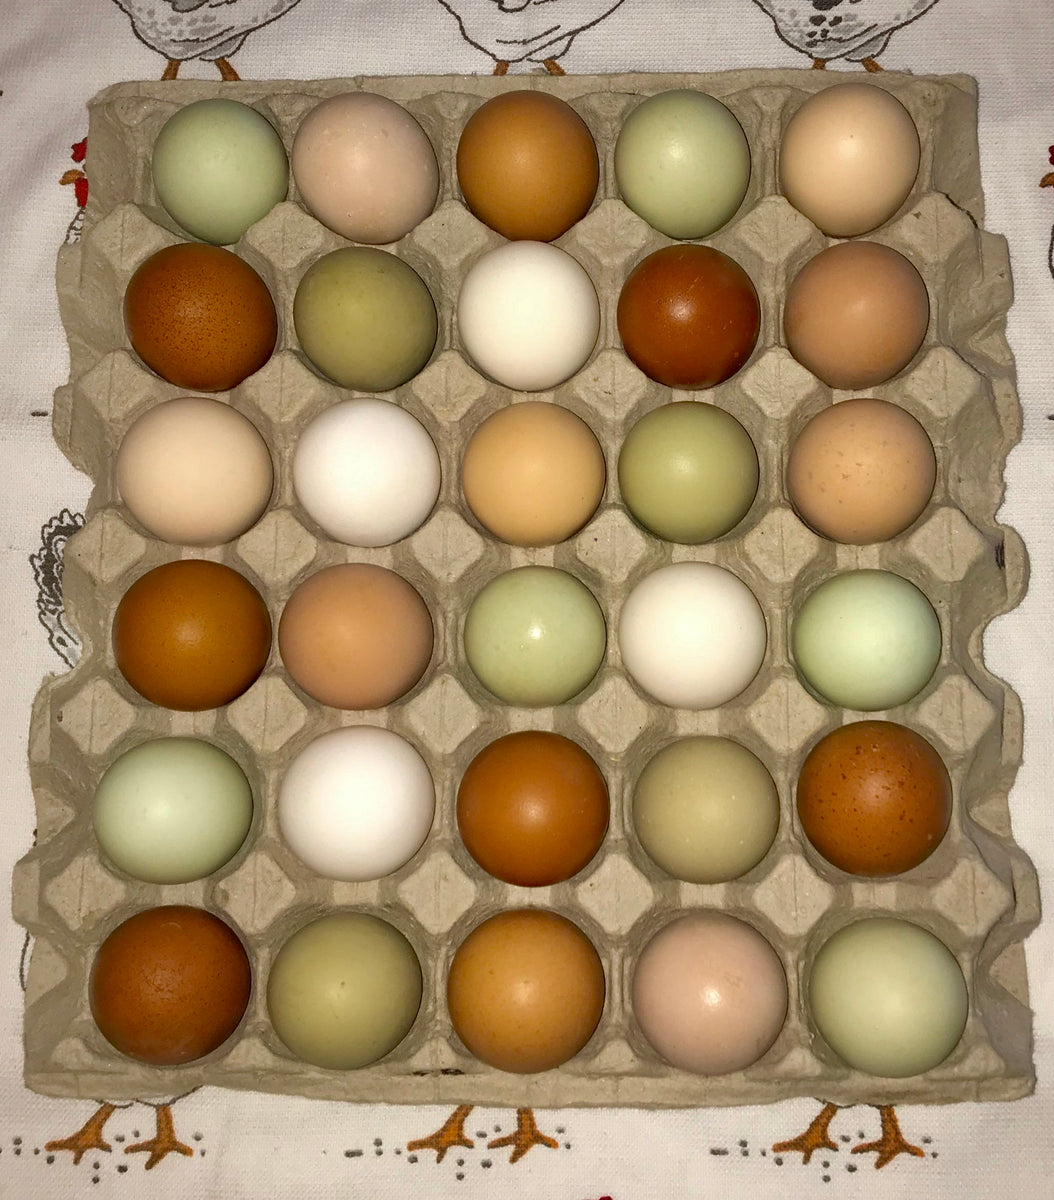 Pasture Raised Chicken Eggs Mixed Mediumsmall Wills Eden Farm To Door Market 